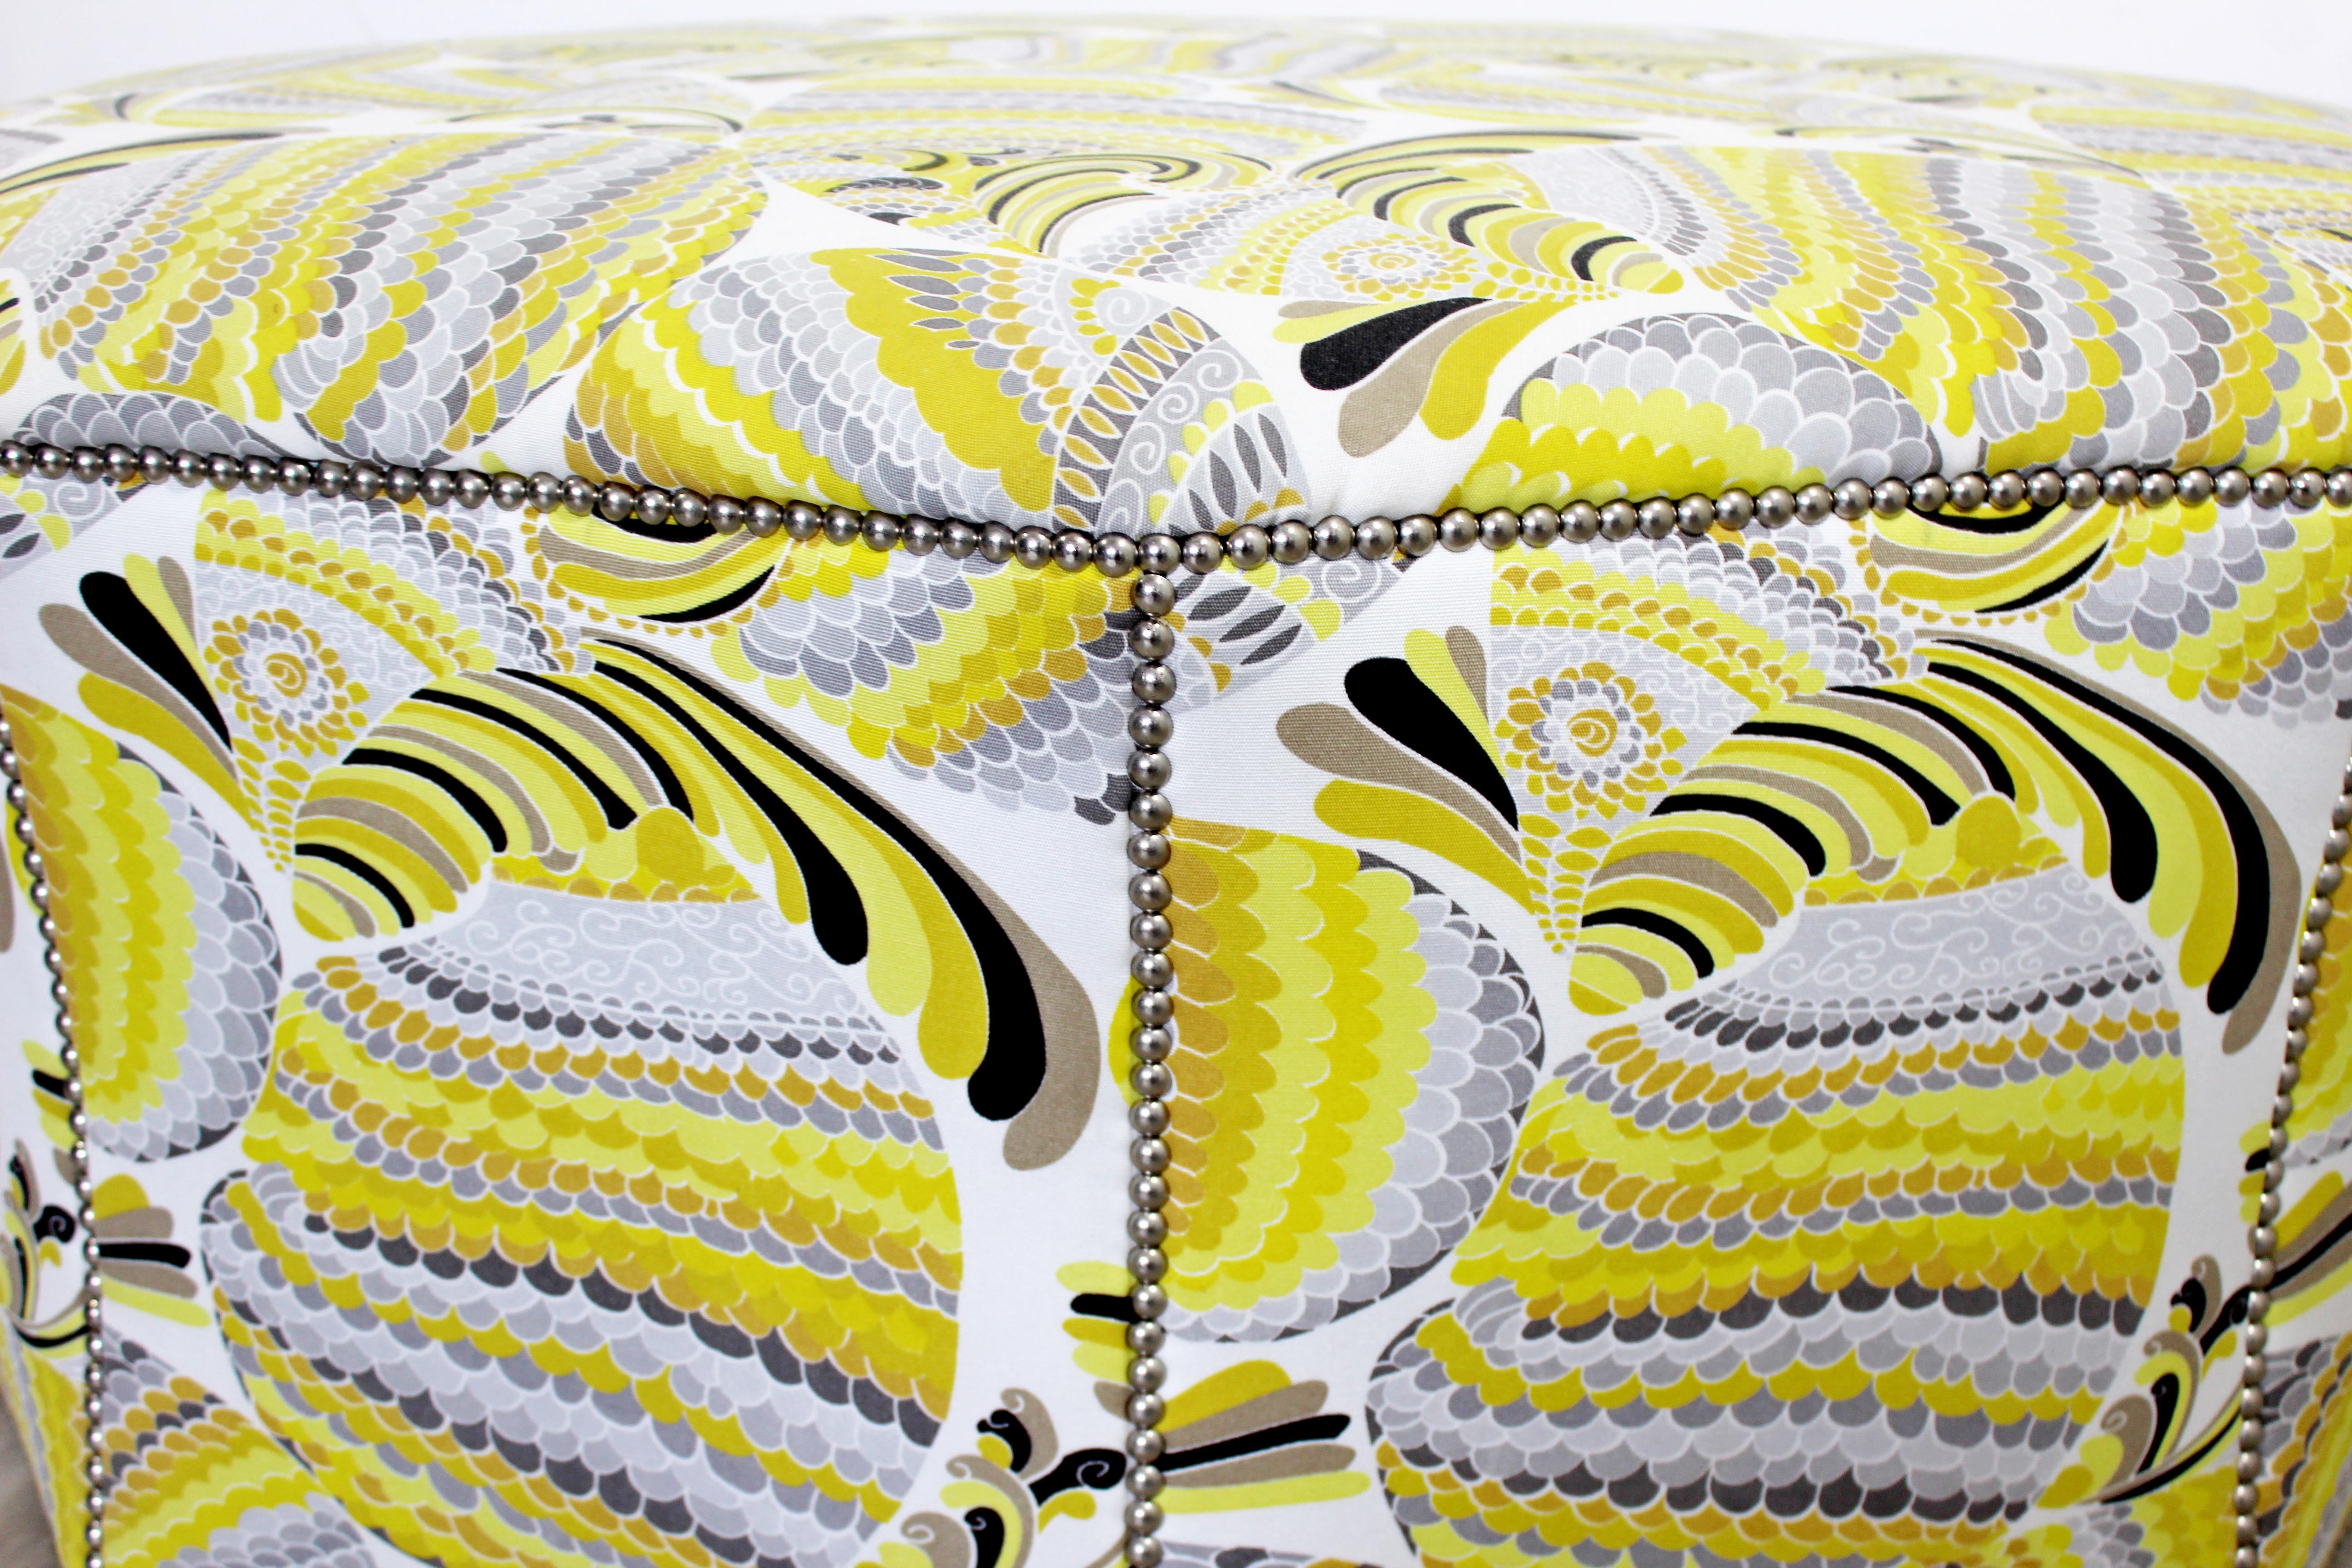 Fabric Contemporary Postmodern Swaim Studded Upholstered Large Ottoman Foot Stool Seat